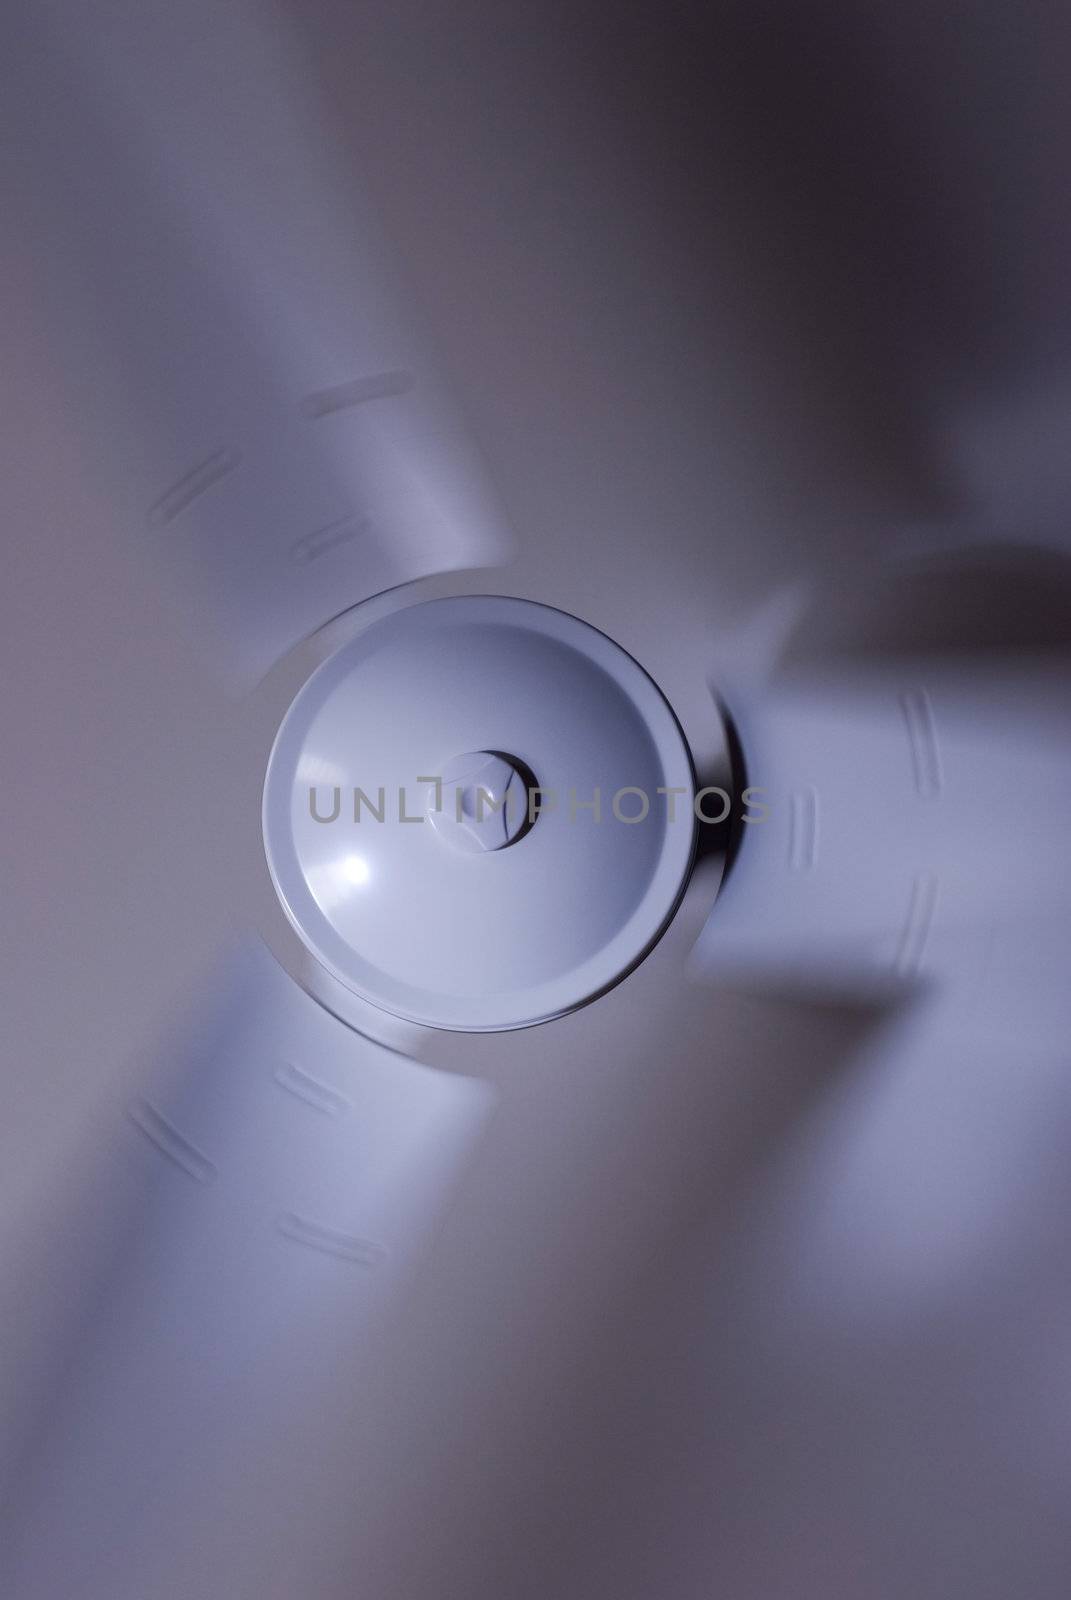 a modern ceiling fan with a motion blur